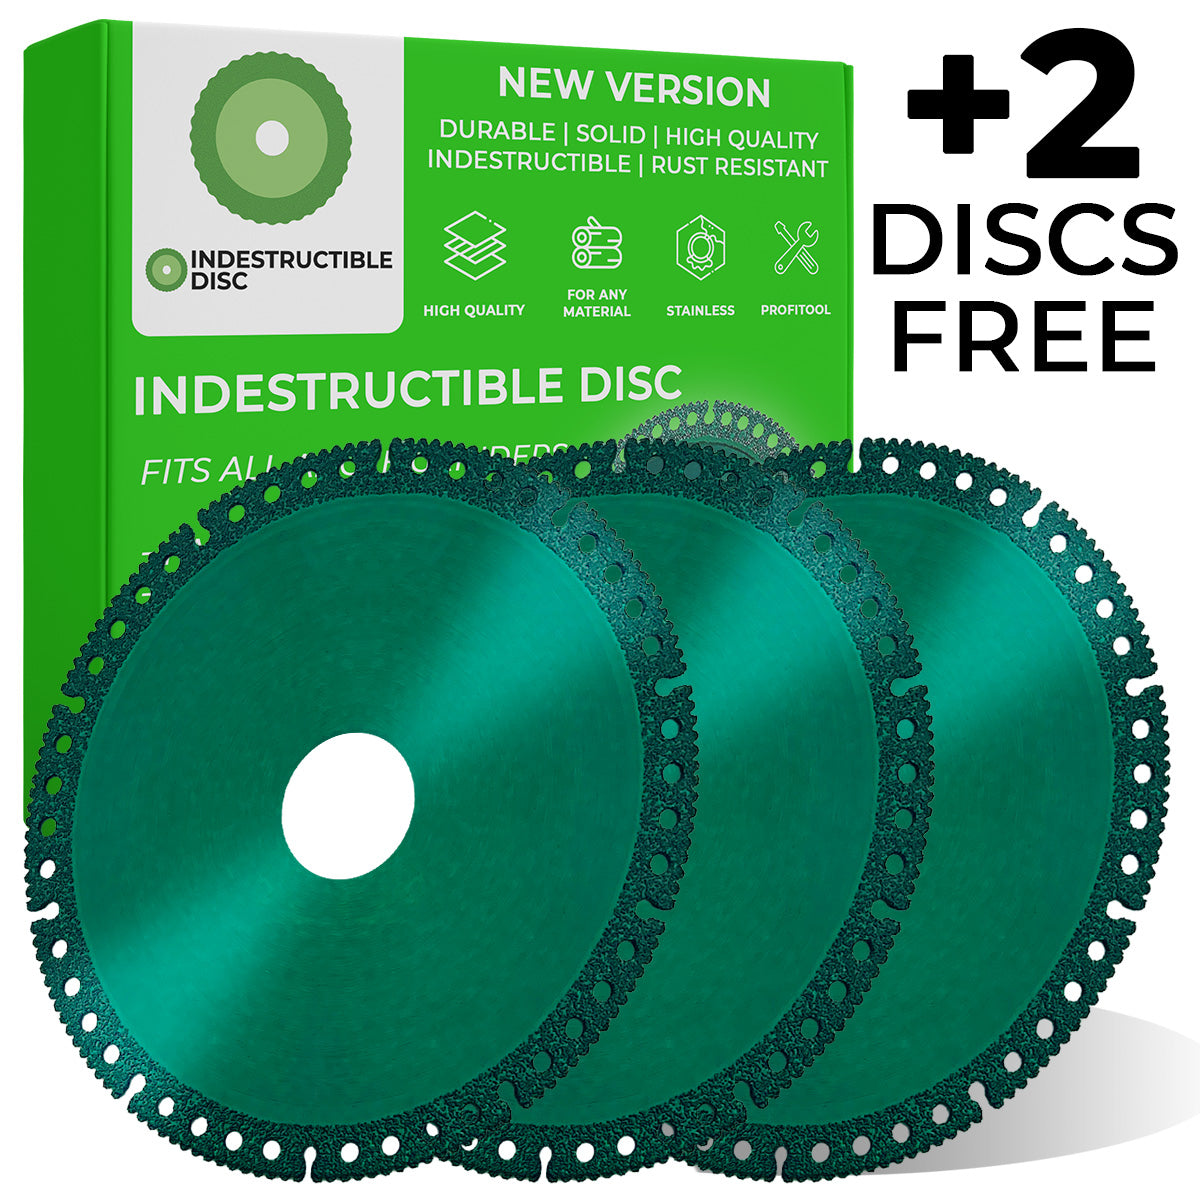 The Original - INDESTRUCTIBLE DISC™ 2.0